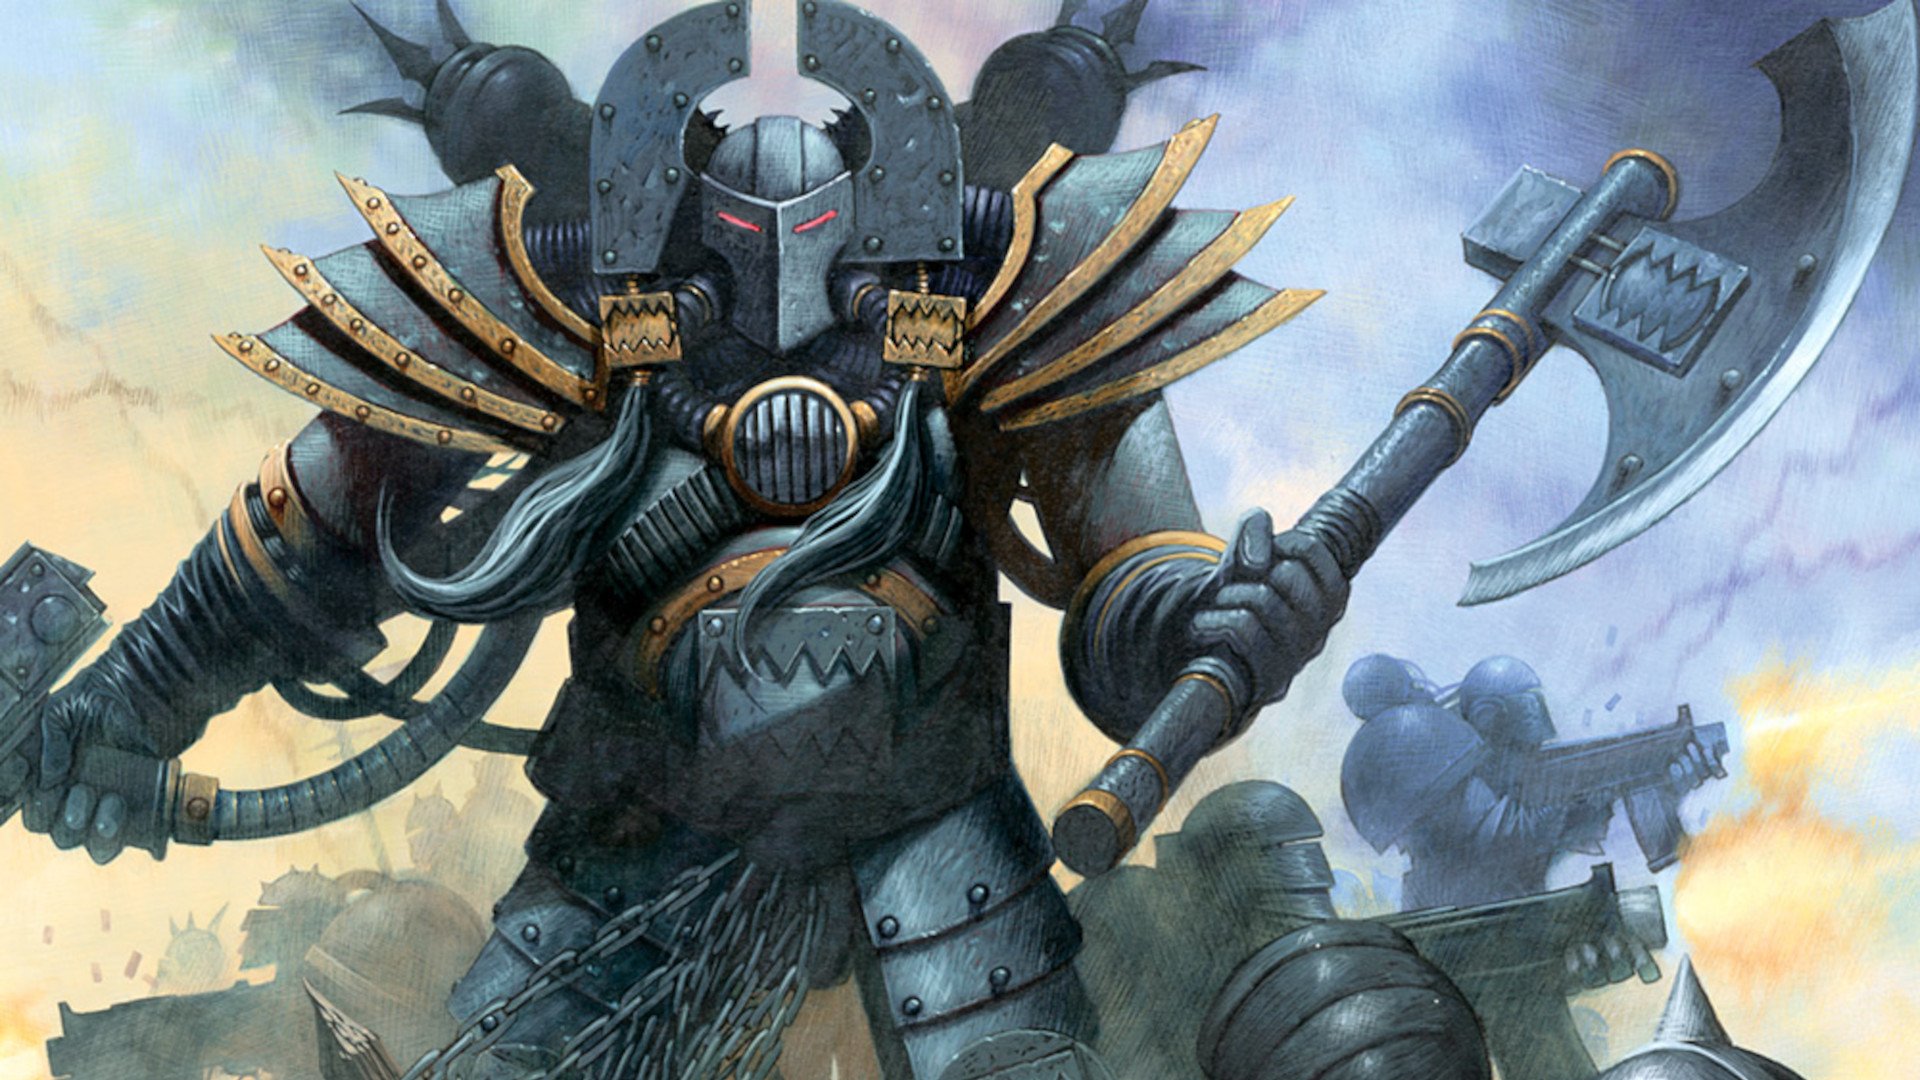 Games Workshop art of Warhammer 40k Kharn the Betrayer during the Horus Heresy